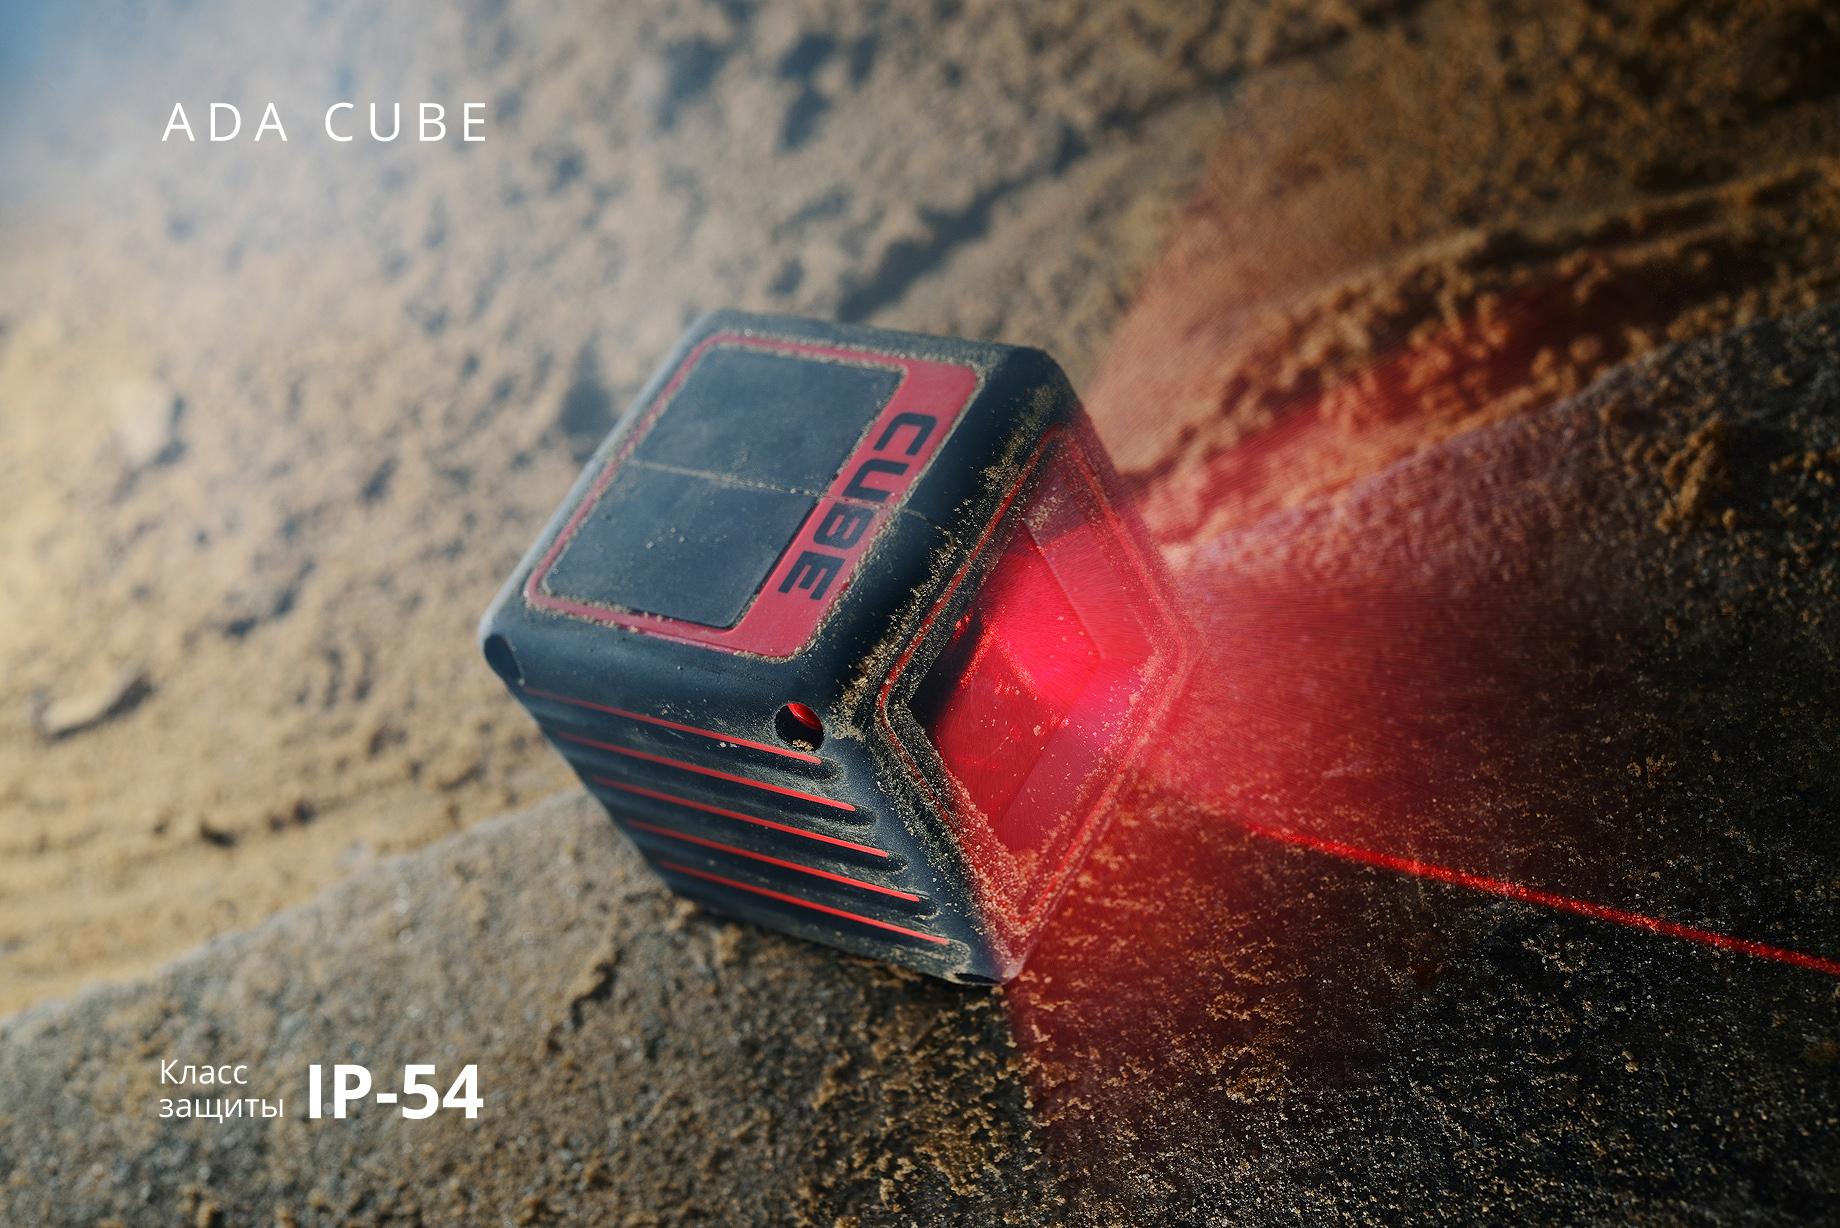 Cube ultimate edition. Лазерный уровень ada Cube Basic Edition а00341. Cube Laser class 2. Ada instruments Cube 3d Ultimate Edition (а00385) со штативом. Cube Laser class 2 цена.